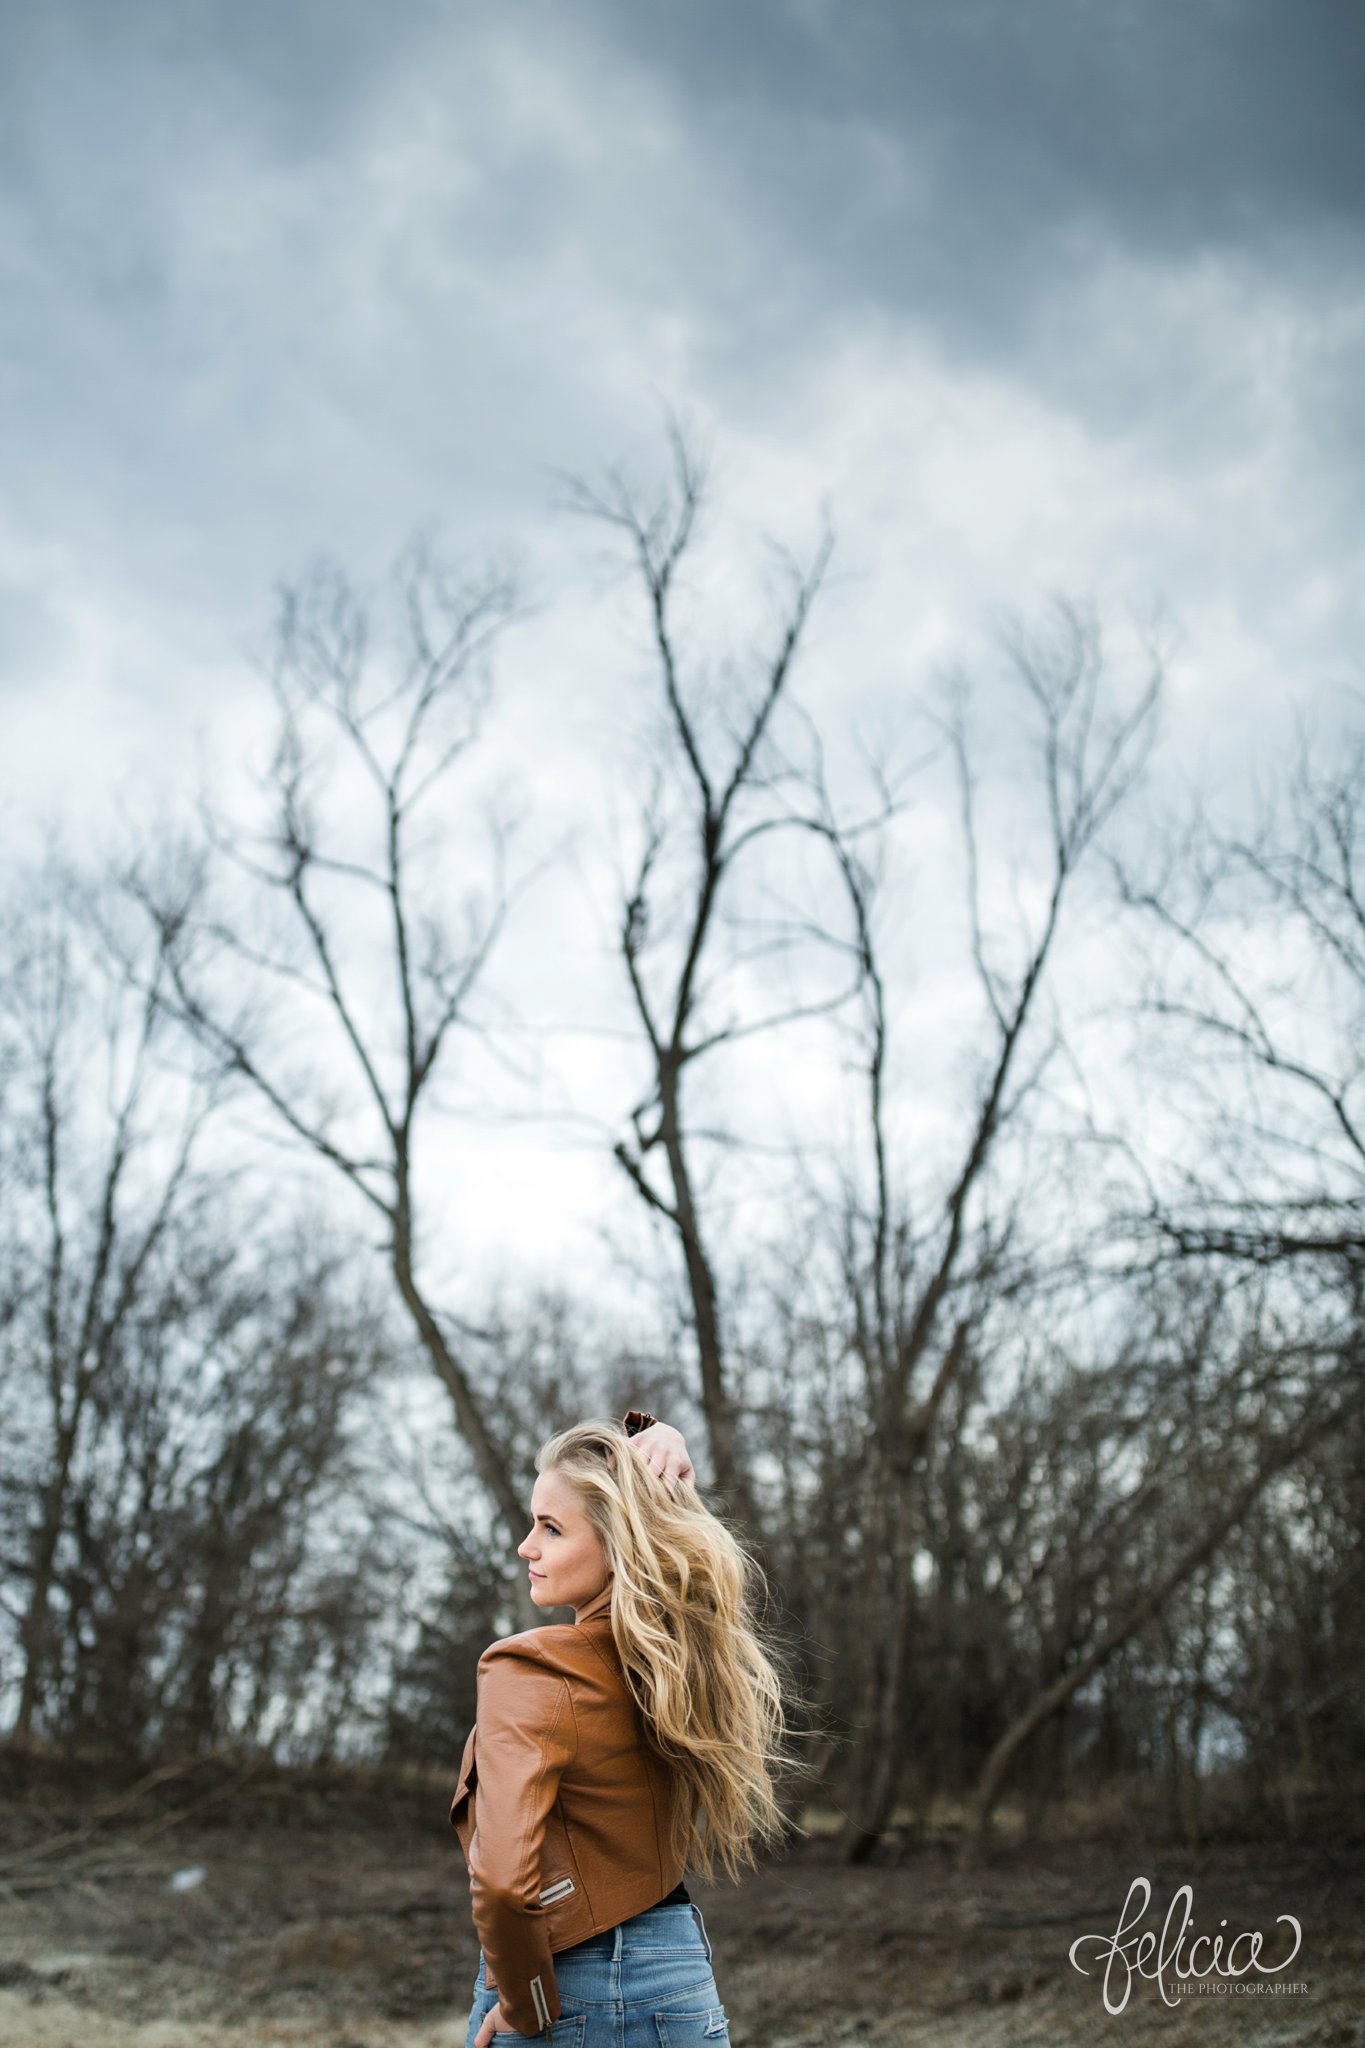 senior photos | senior photography | Lenexa | Kansas | images by feliciathephotographer.com | chic | dancer | dramatic pose | leather jacket | rustic background | forest background | long blonde hair | hand on hip | hand in hair 